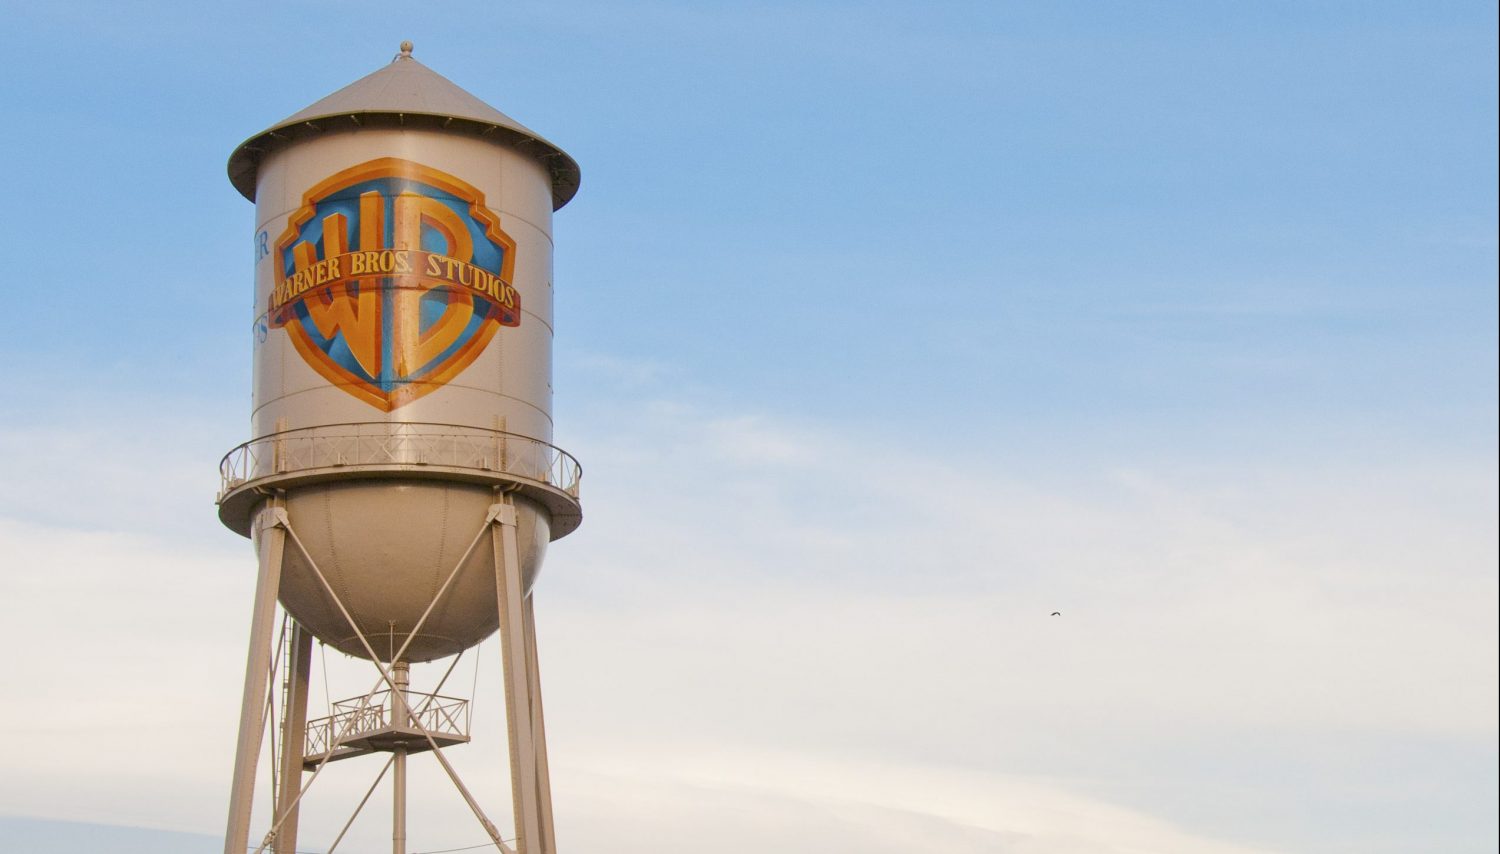 Caixa d'água da Warner Bros. 